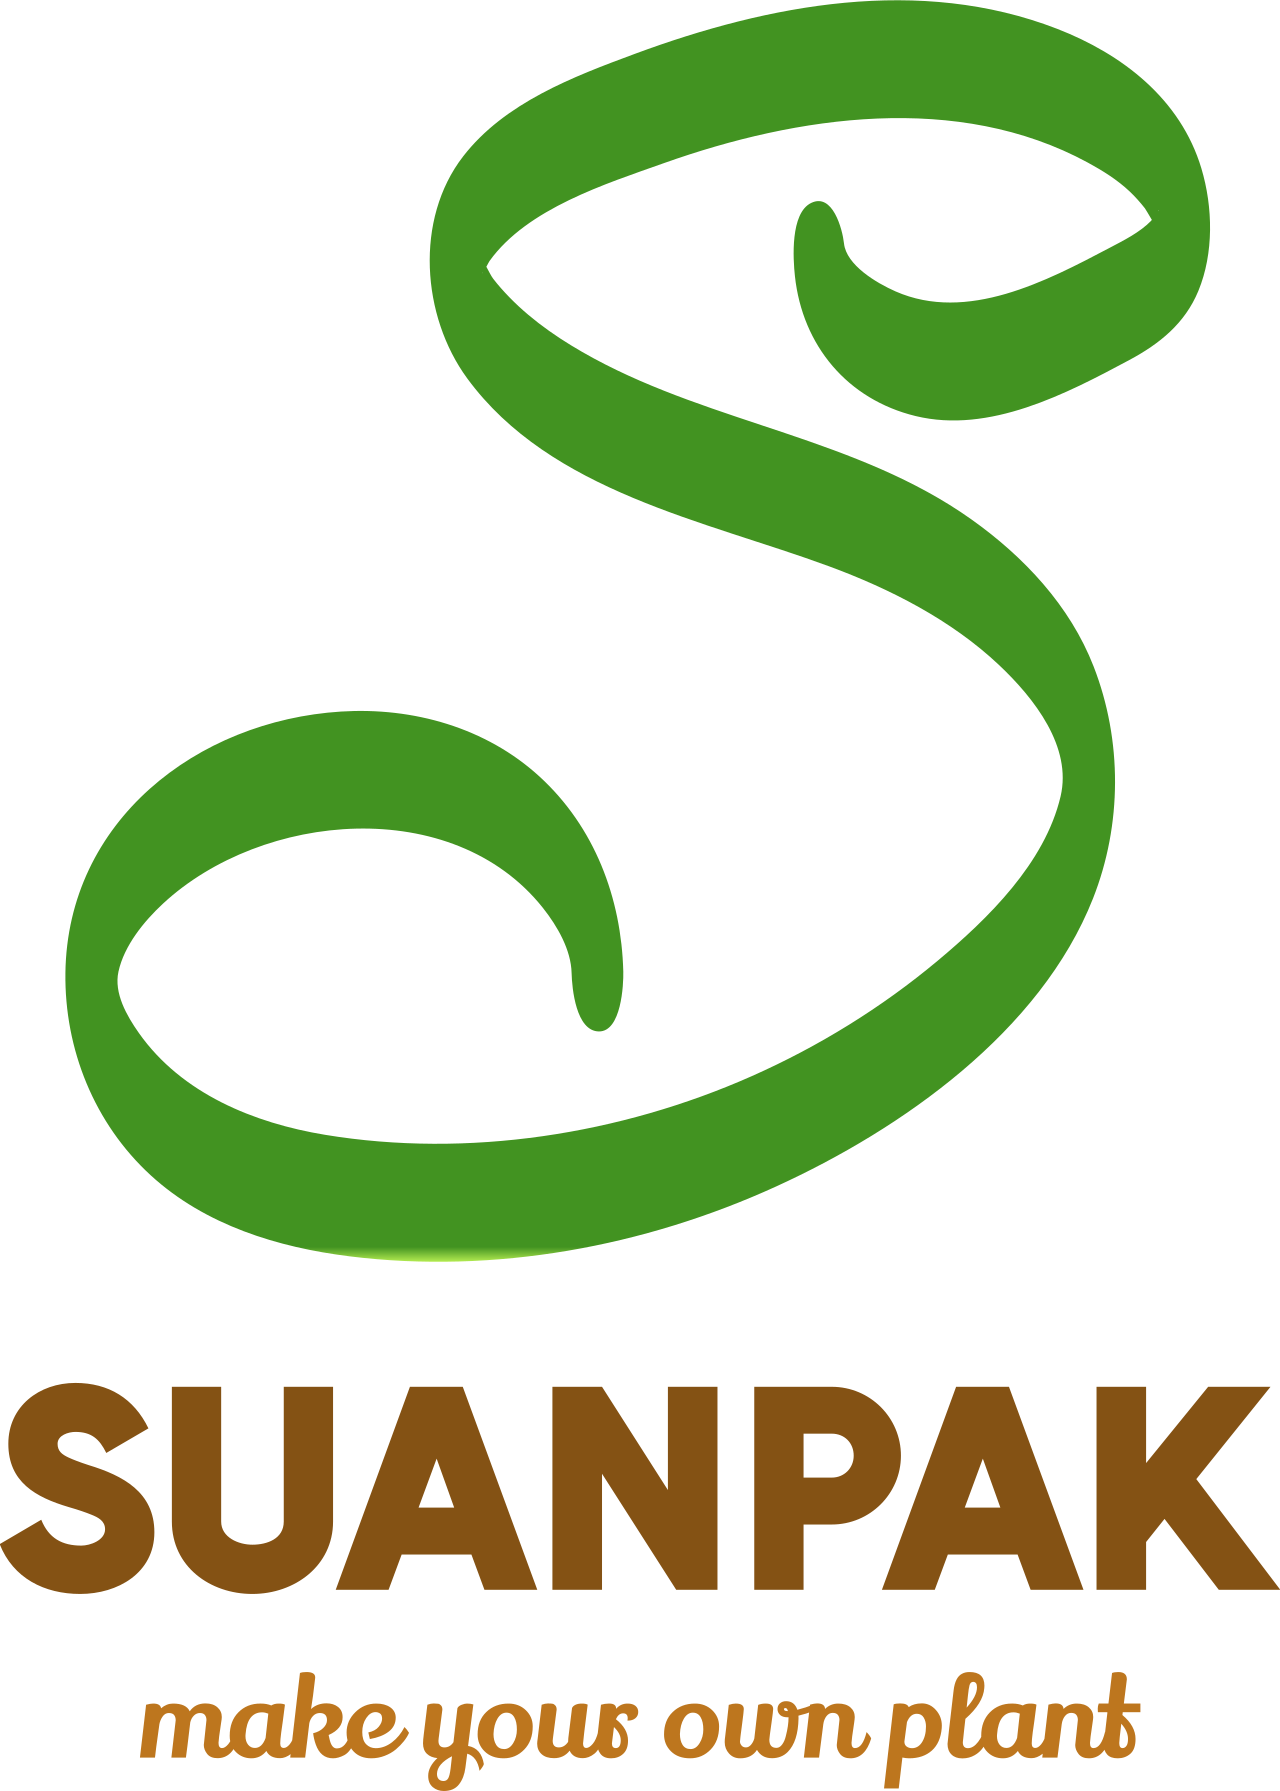 SuanPak's web page